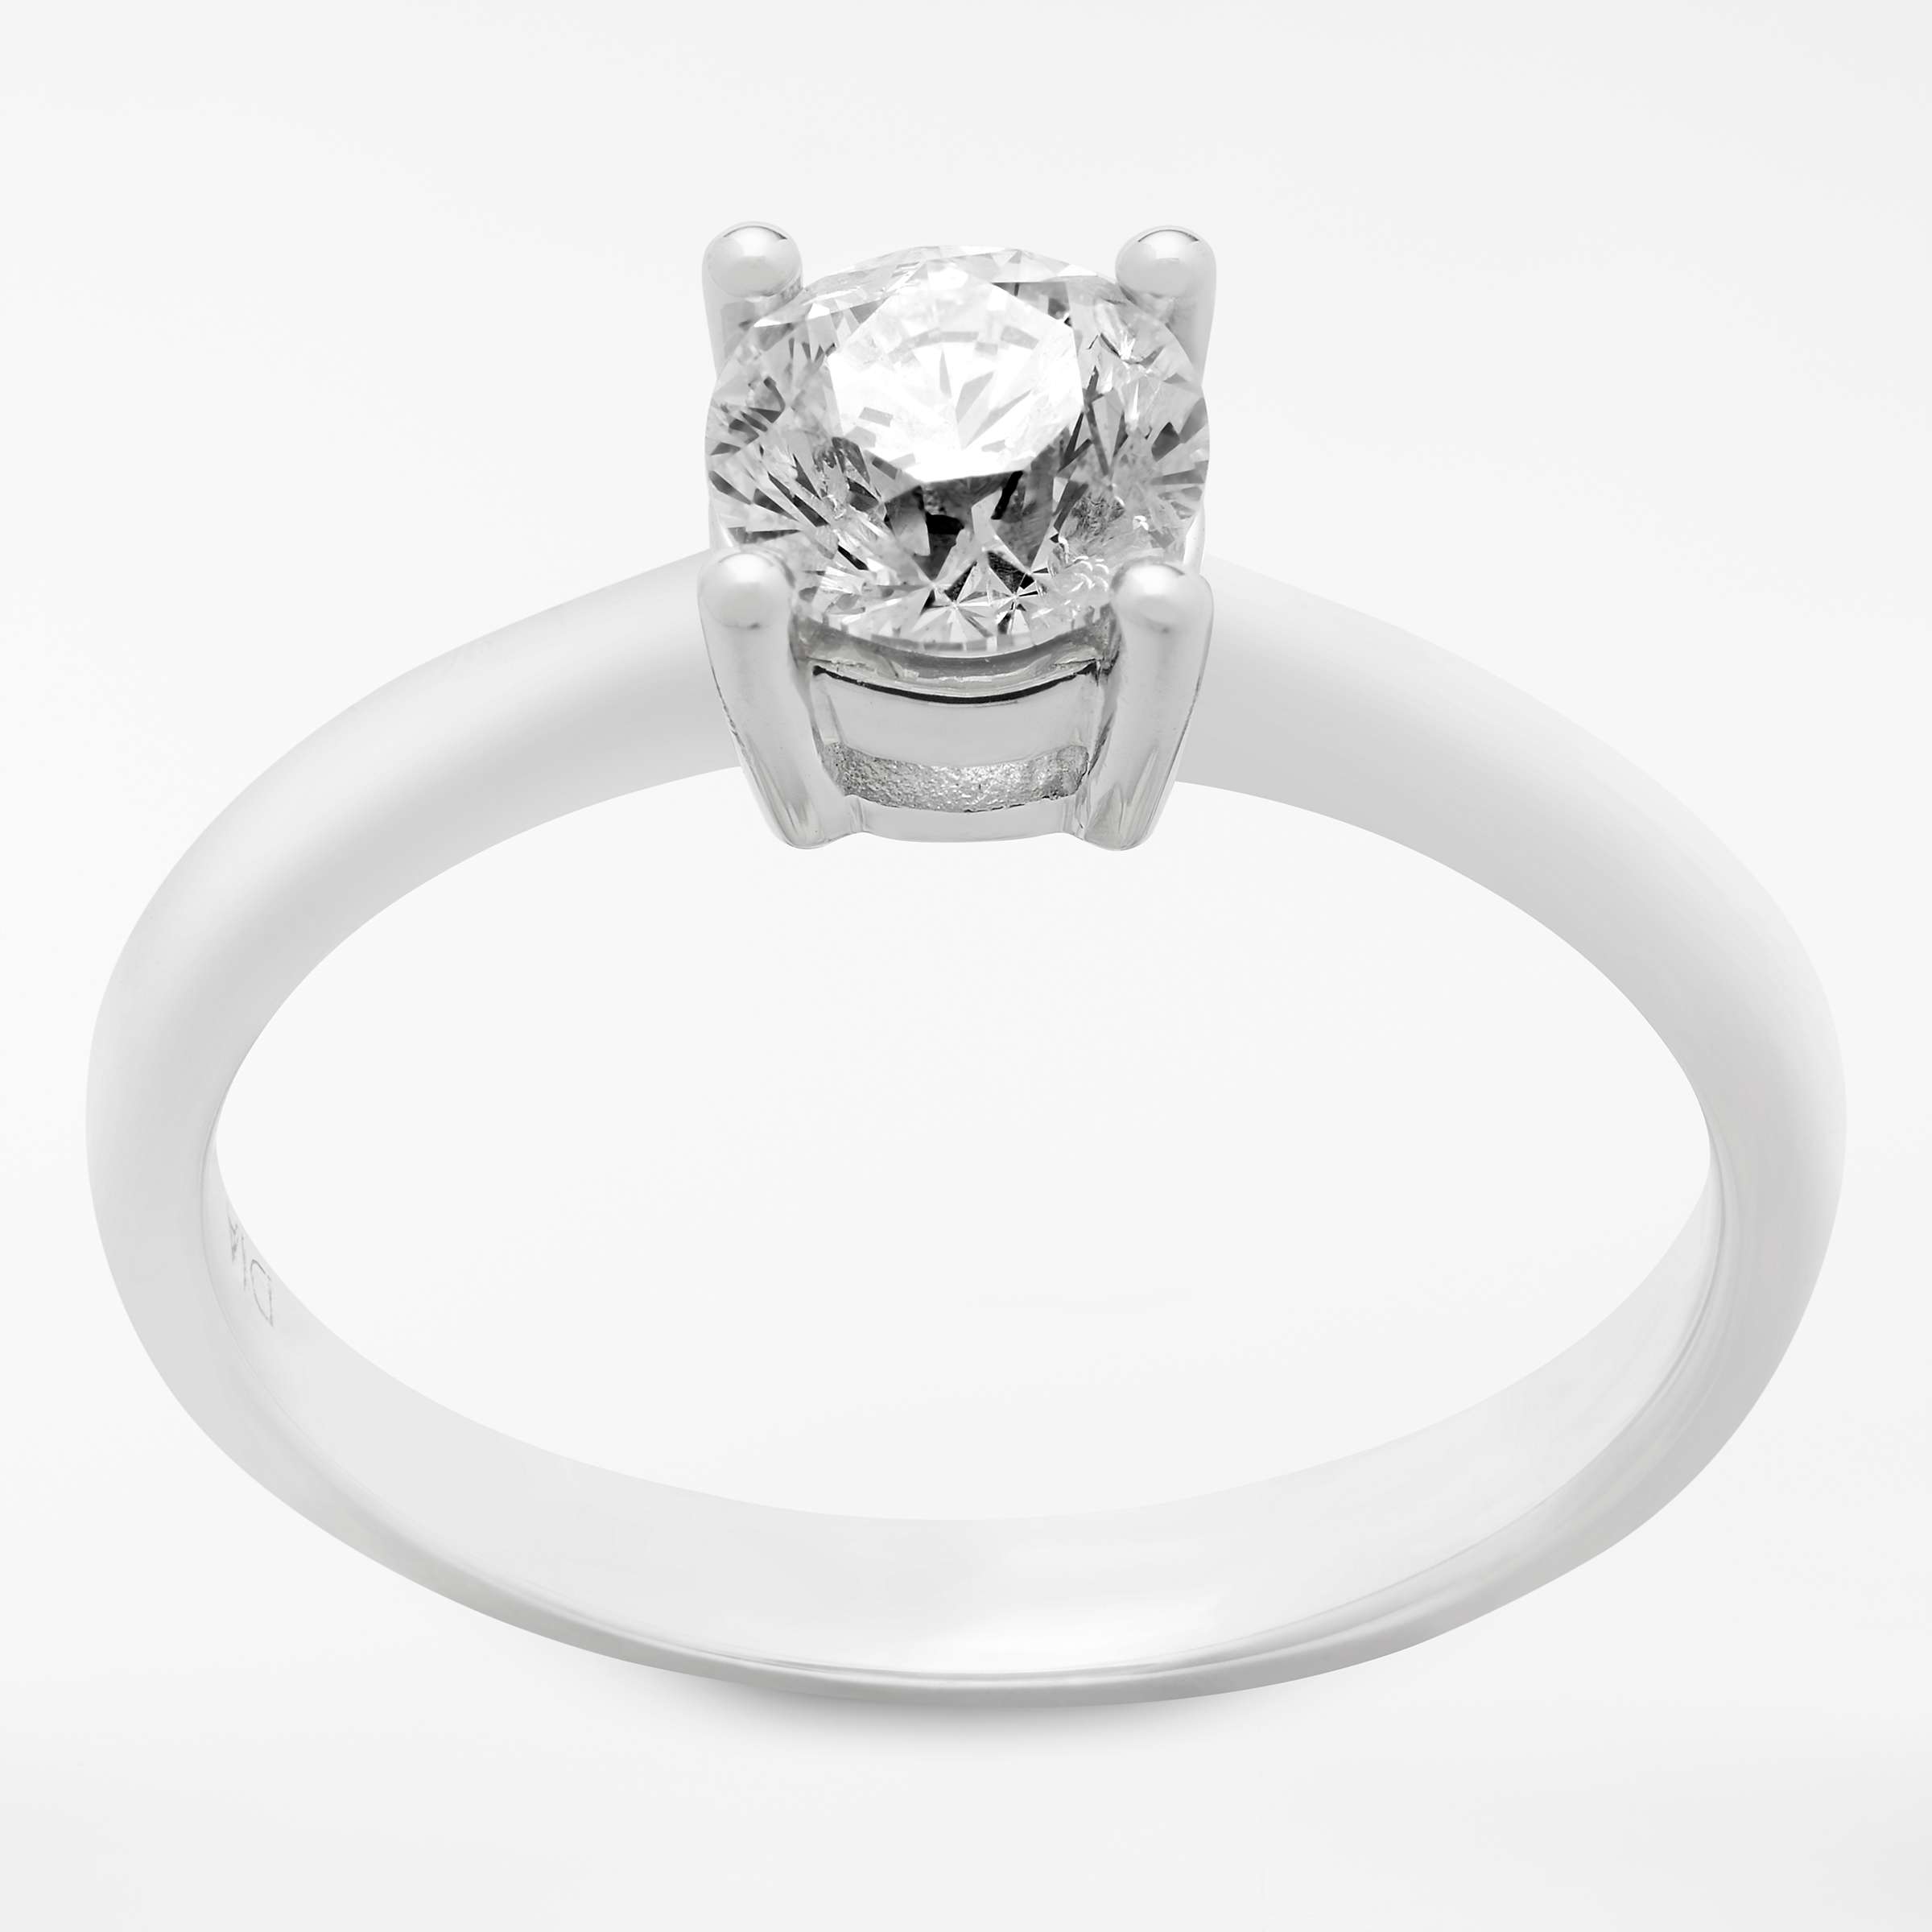 Buy Mogul 18ct White Gold Princess Cut Diamond Engagement Ring, 0.7ct Online at johnlewis.com